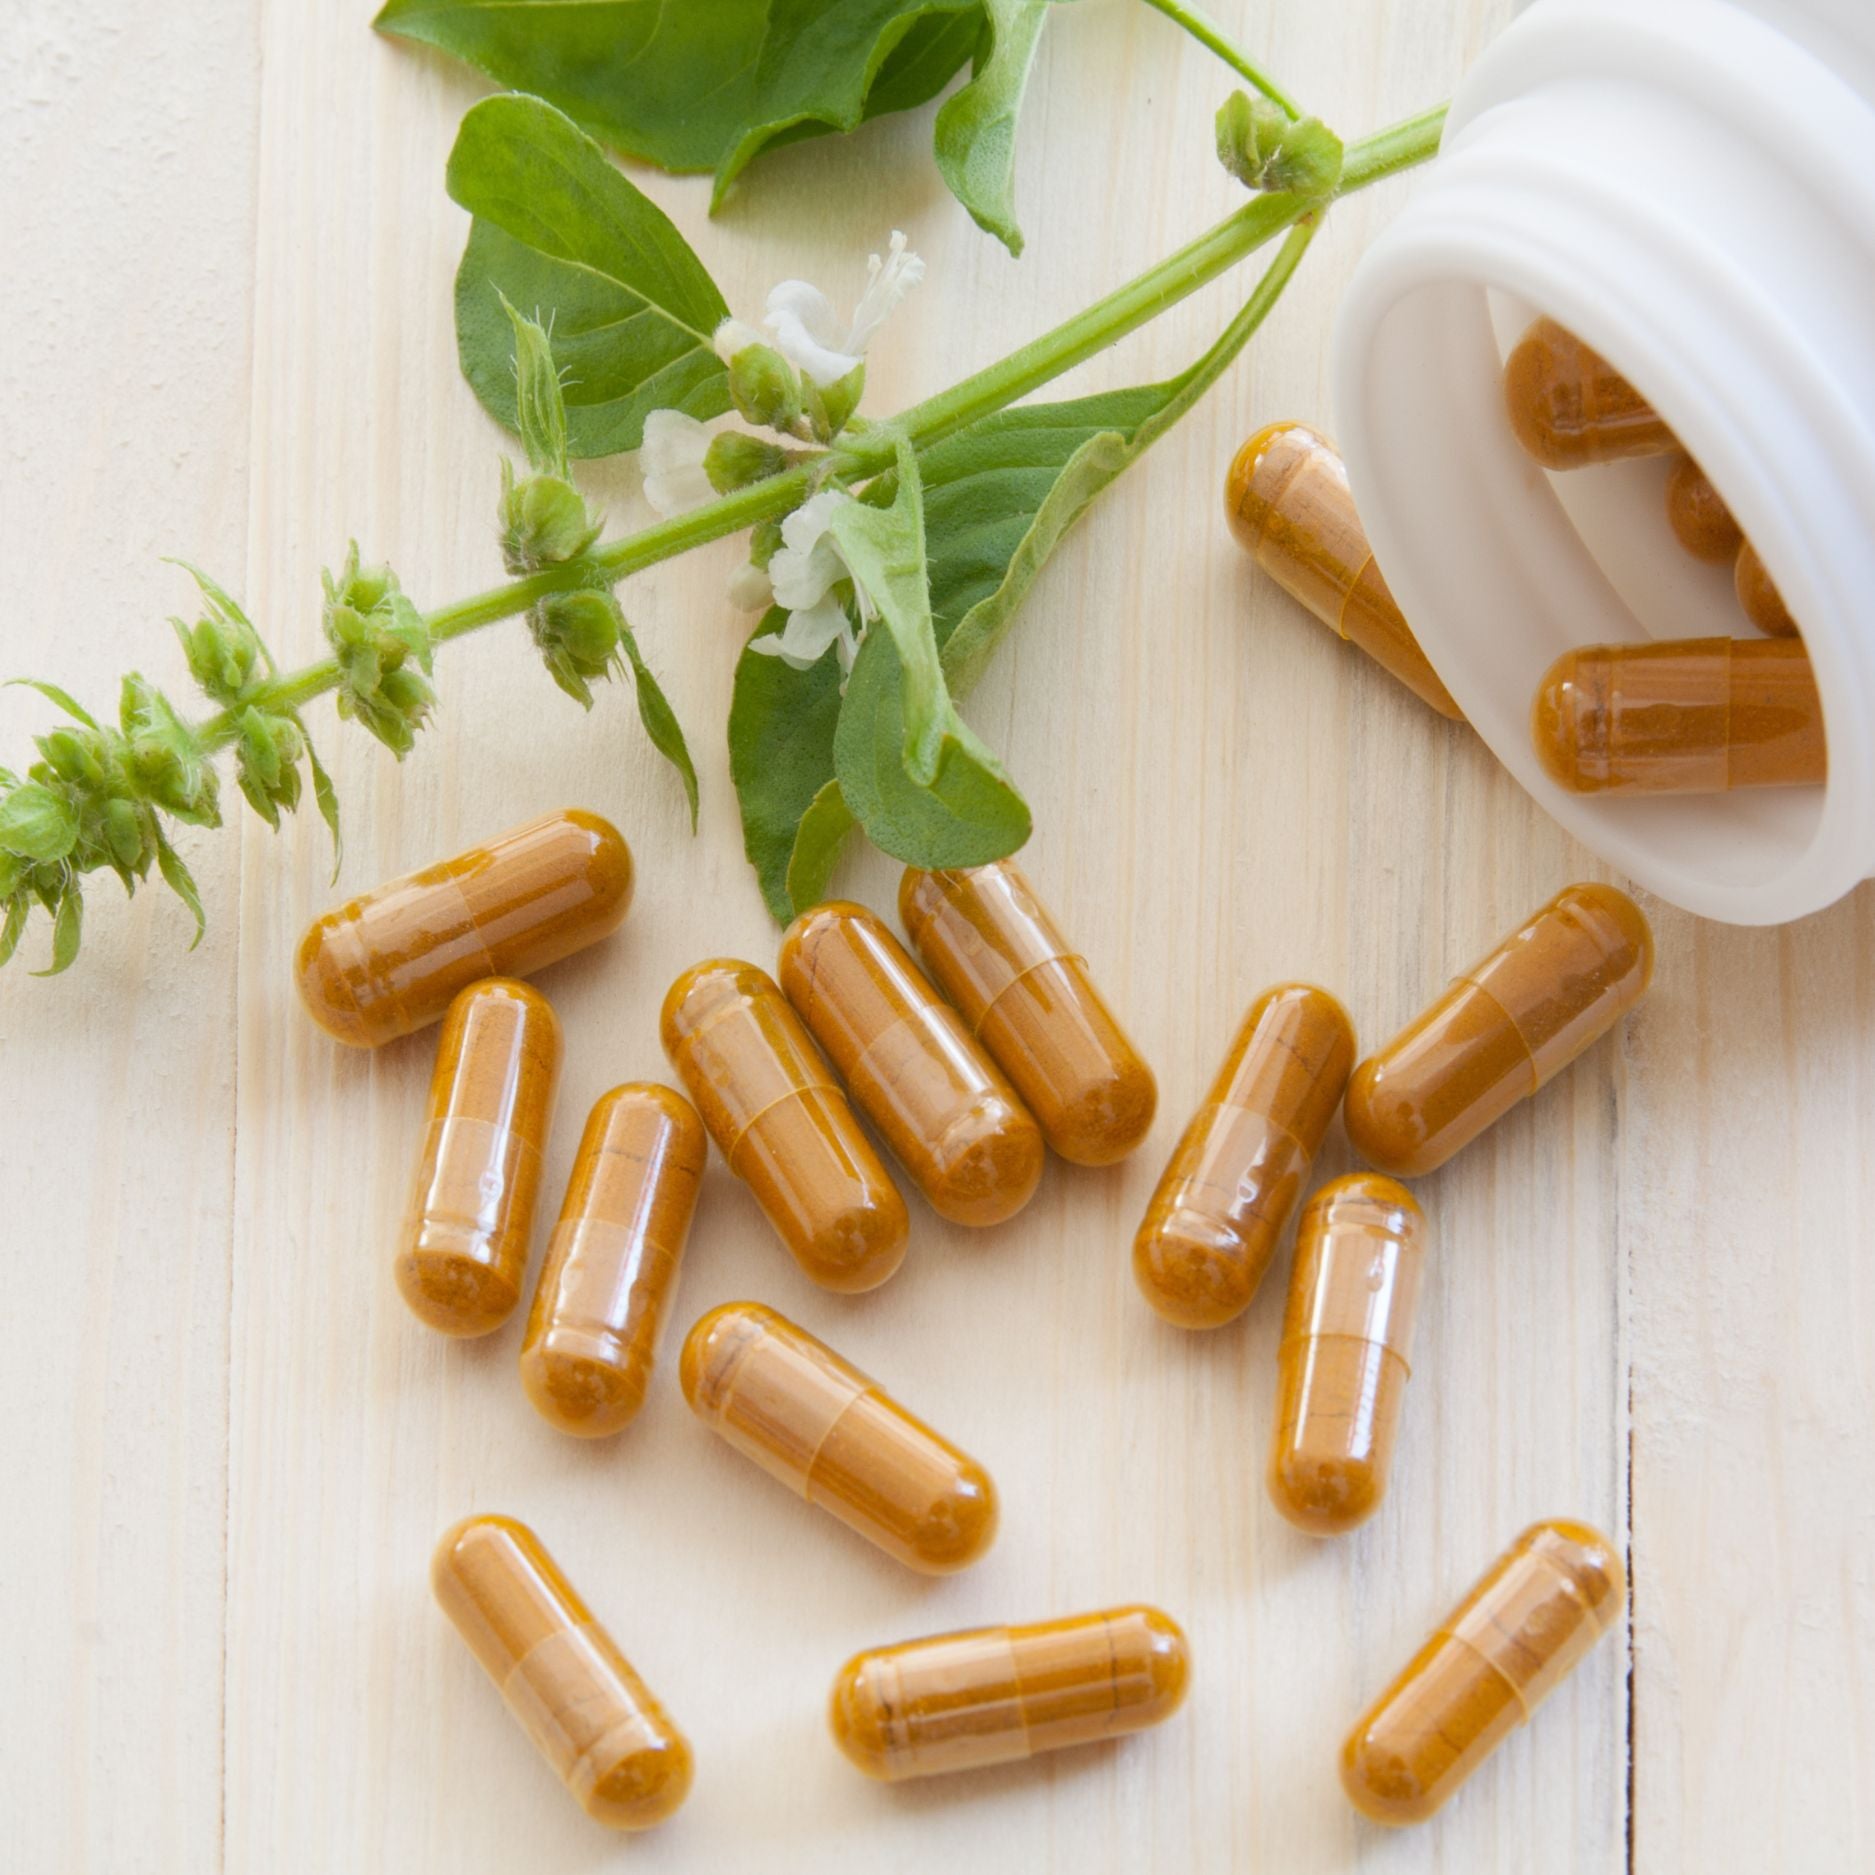 Dietary Herbals: Nutraceuticals